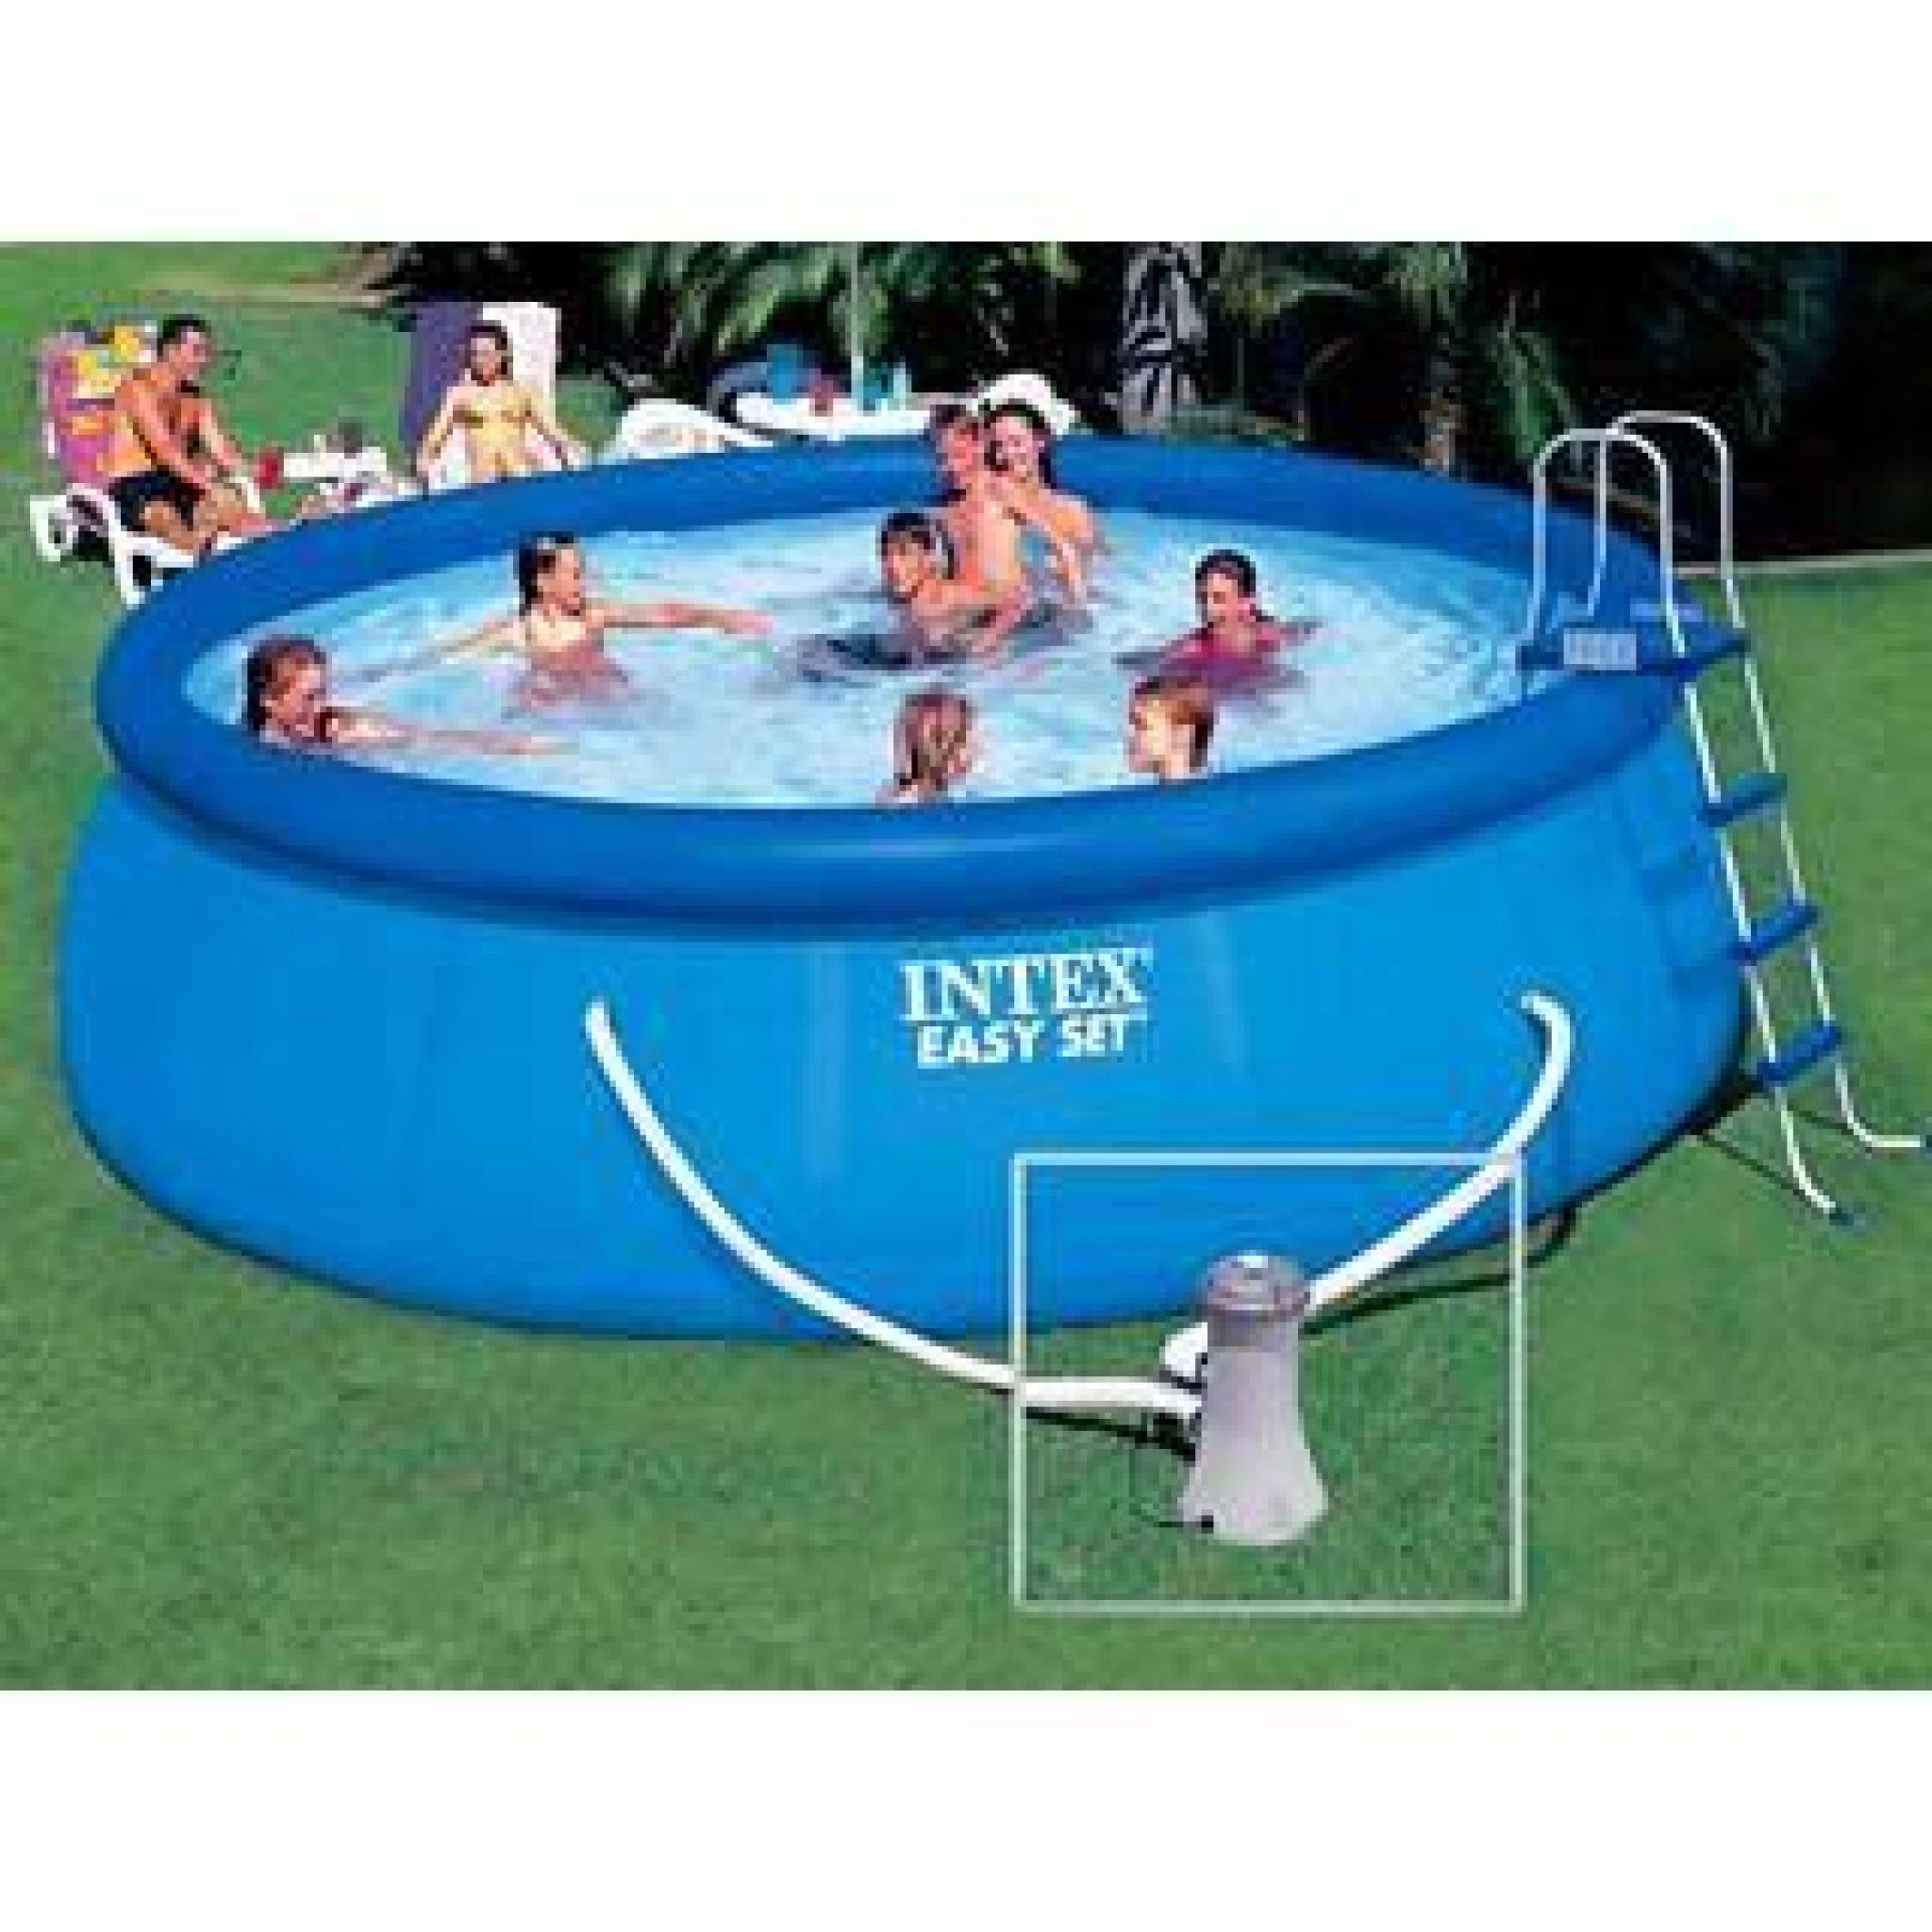 Kit piscine Intex EASY SET ronde 4.57m x 1.22m